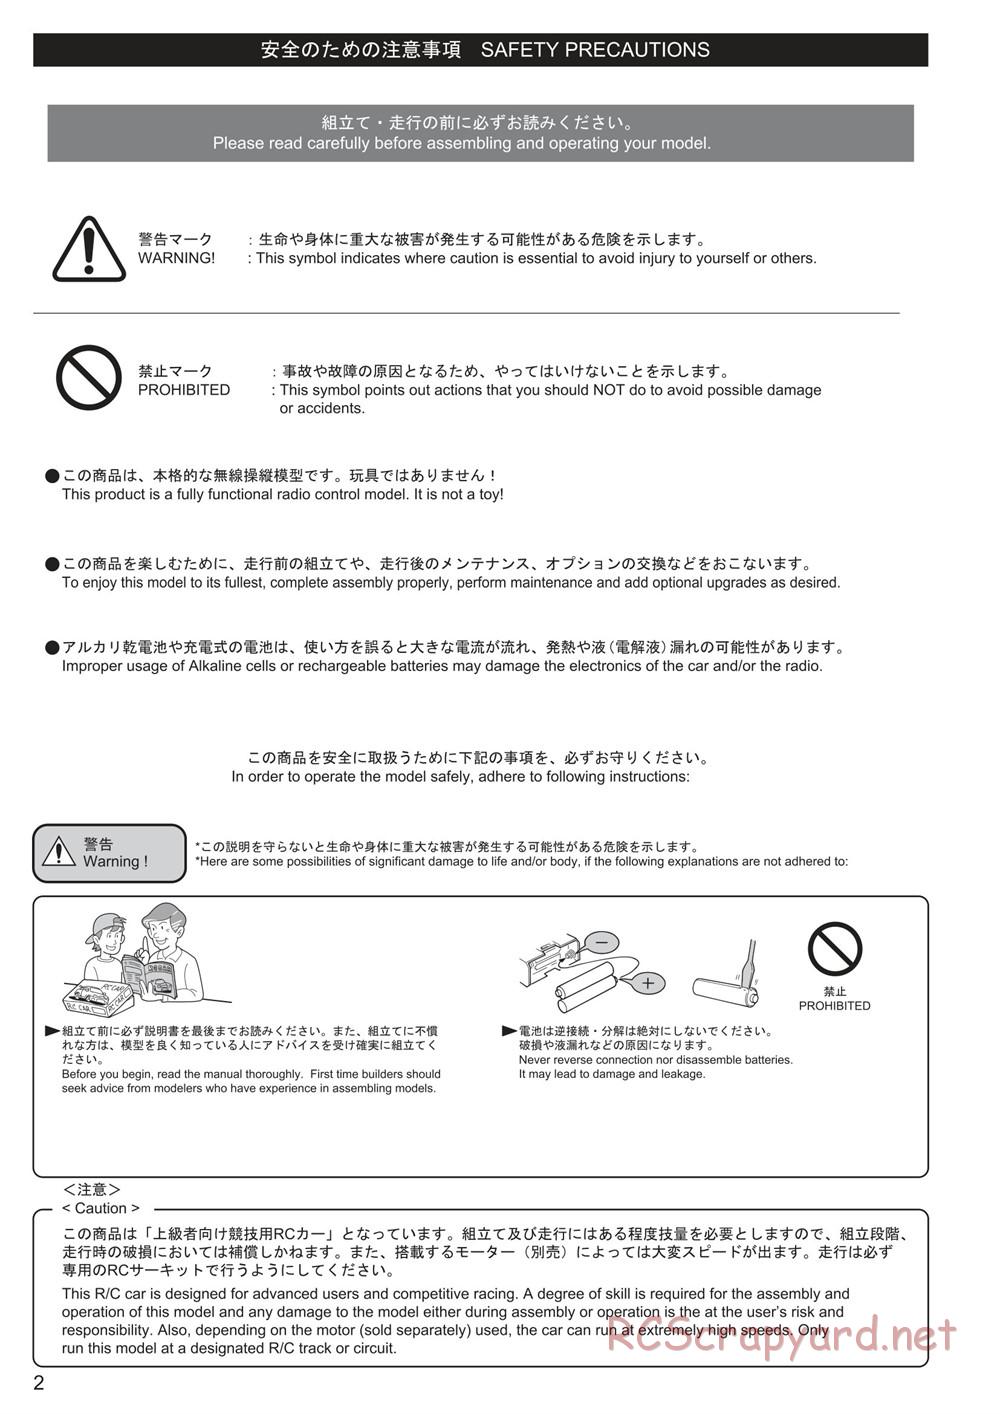 Kyosho - Lazer ZX7 - Manual - Page 2